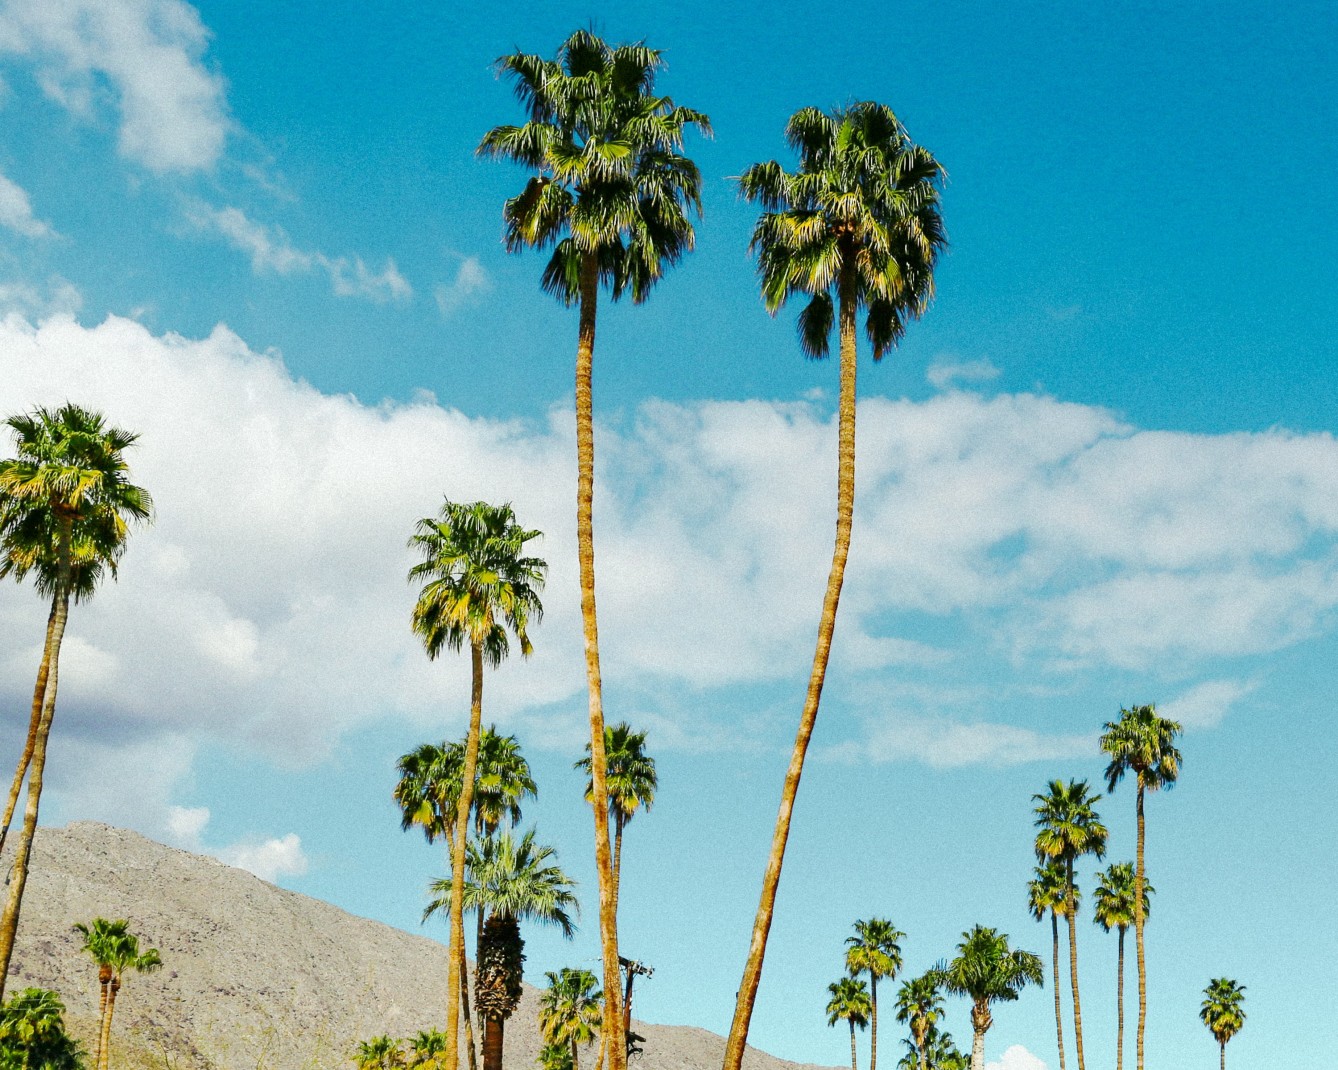 Palm trees in blue skies in Palm Springs. 